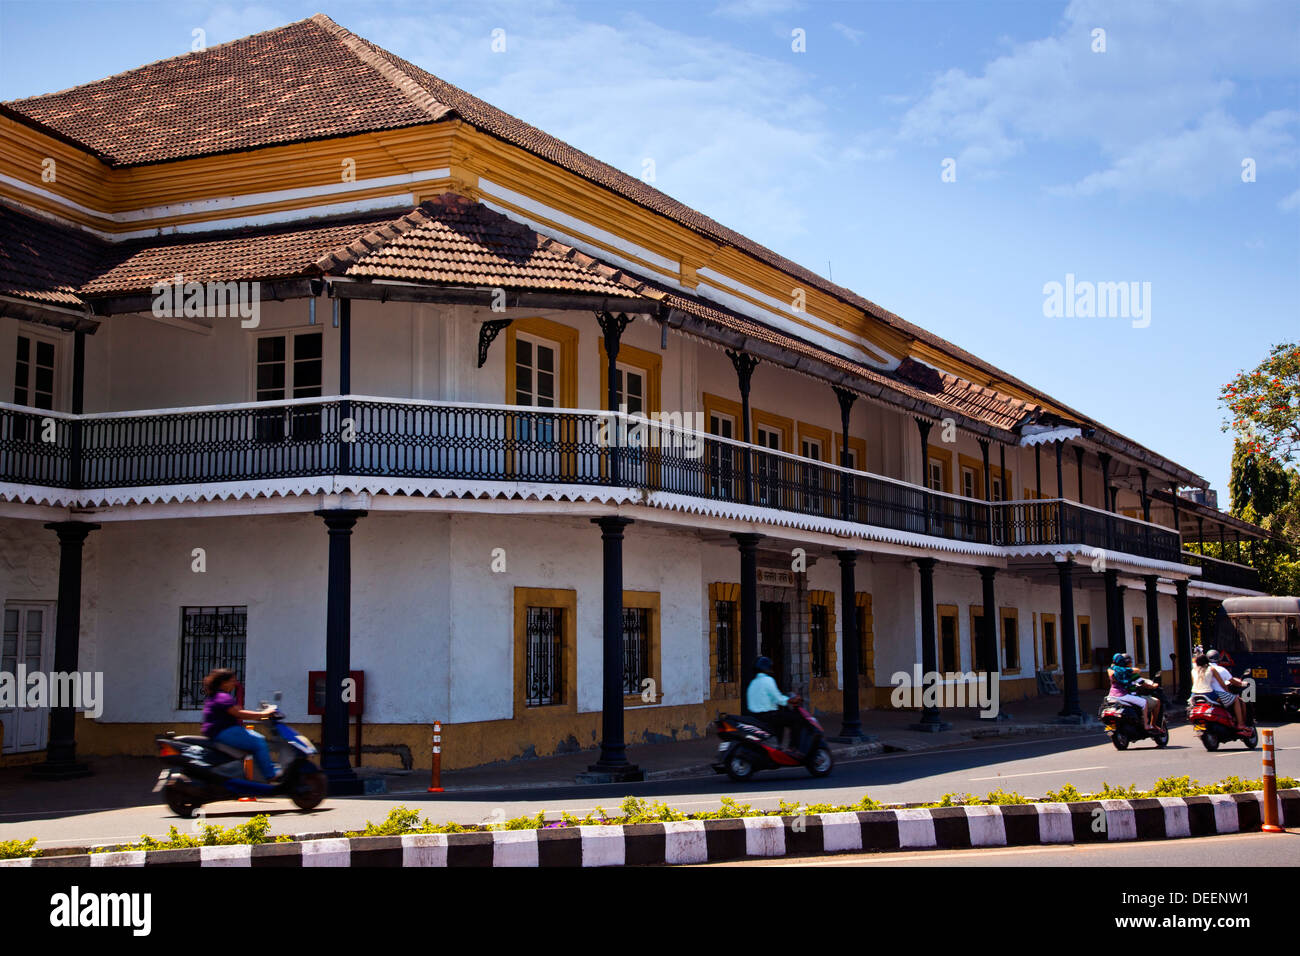 Facade of the government building, Secretariat Building, Panaji, Goa, India Stock Photo